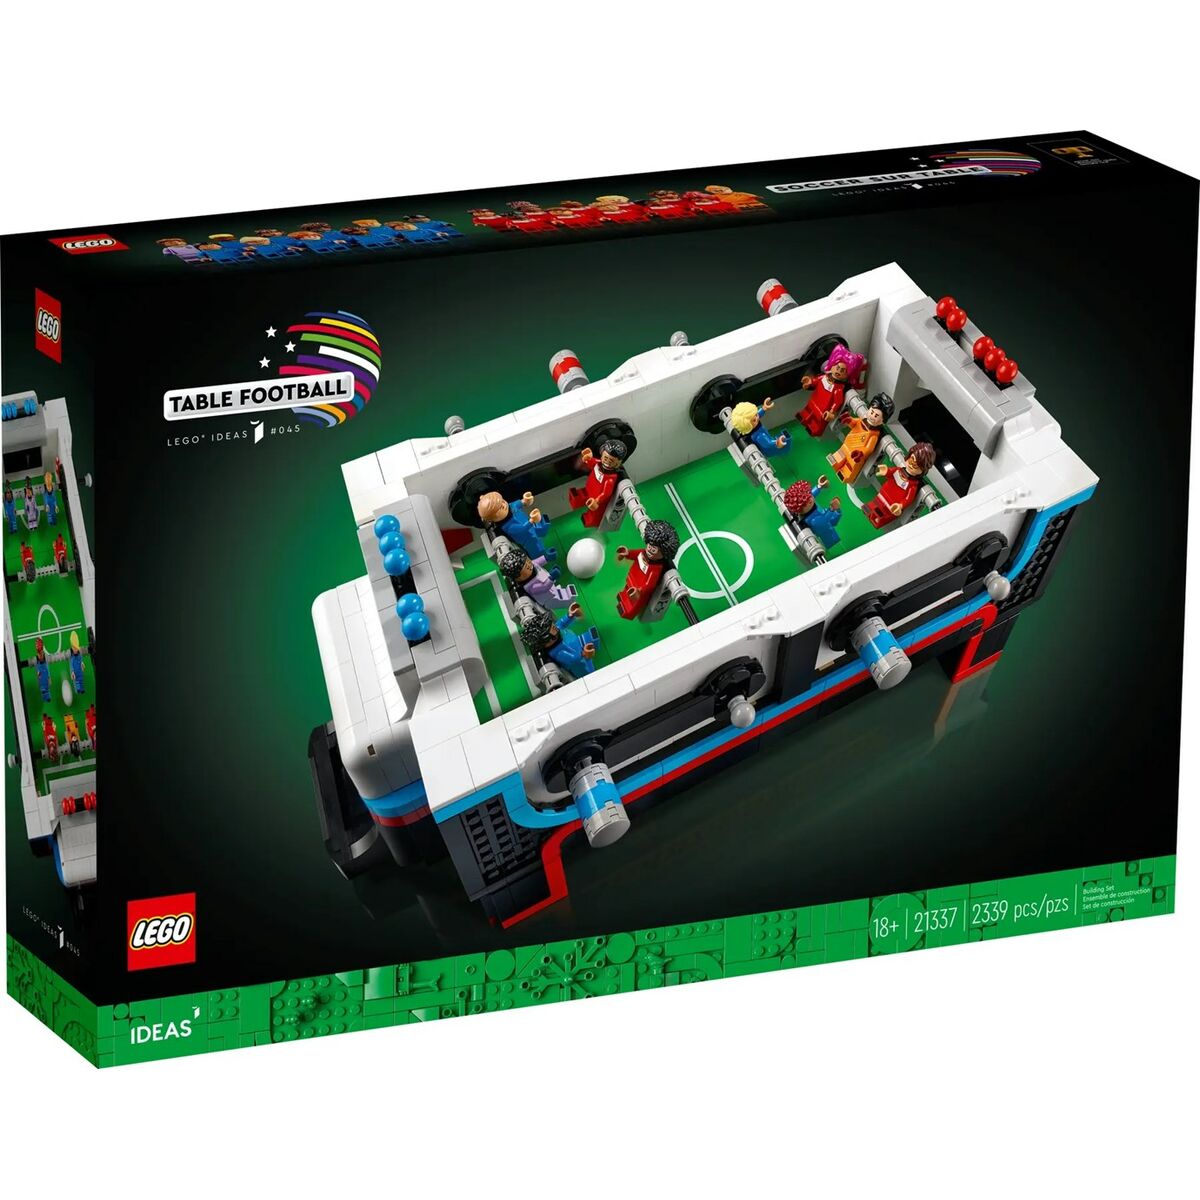 Construction set Lego 21337 Football 2339 Pieces